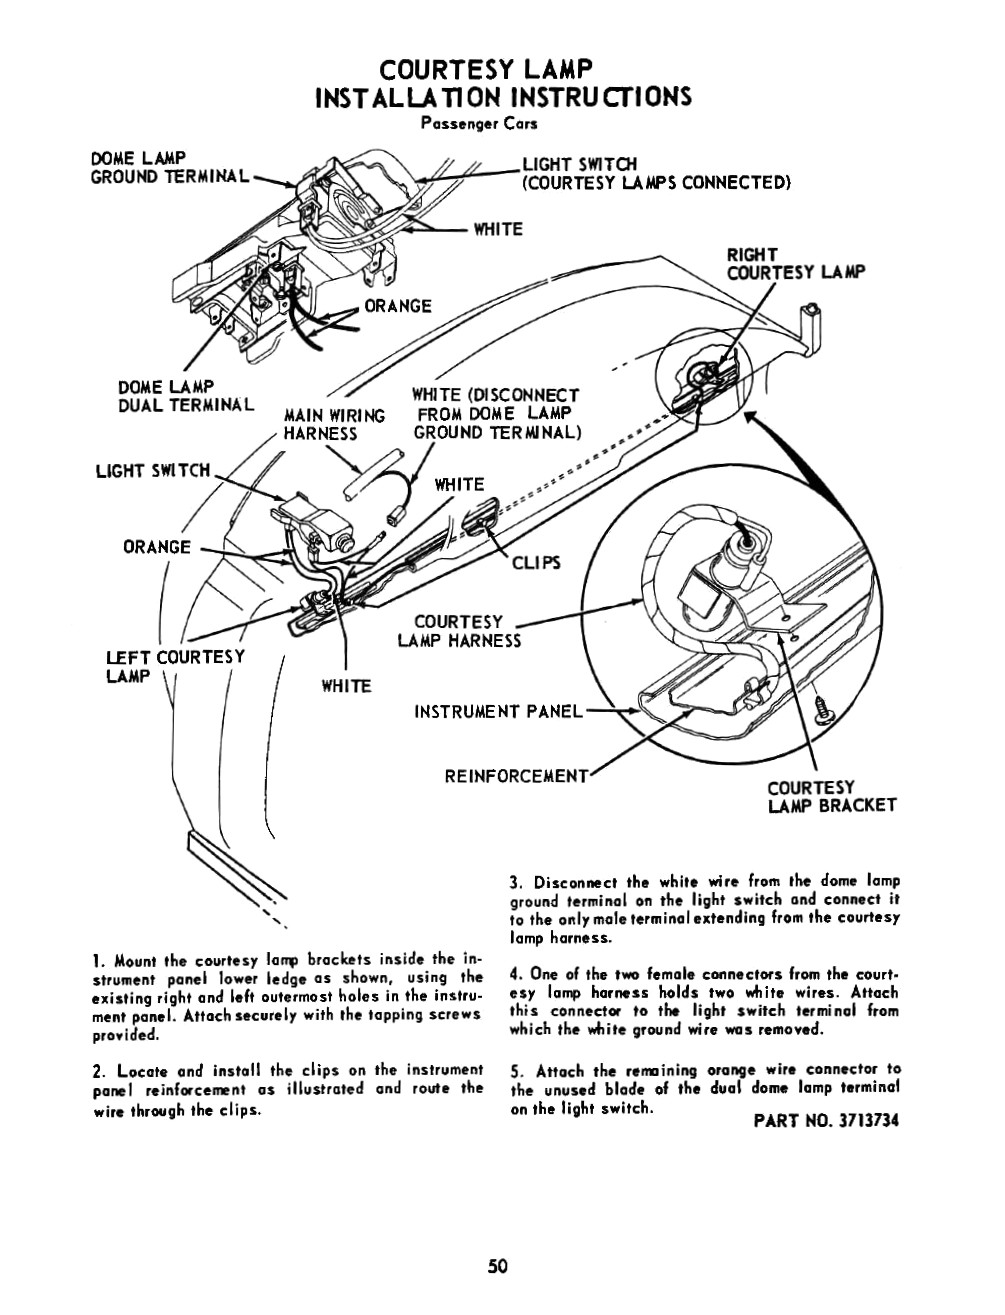 1955_Chevrolet_Acc_Manual-50